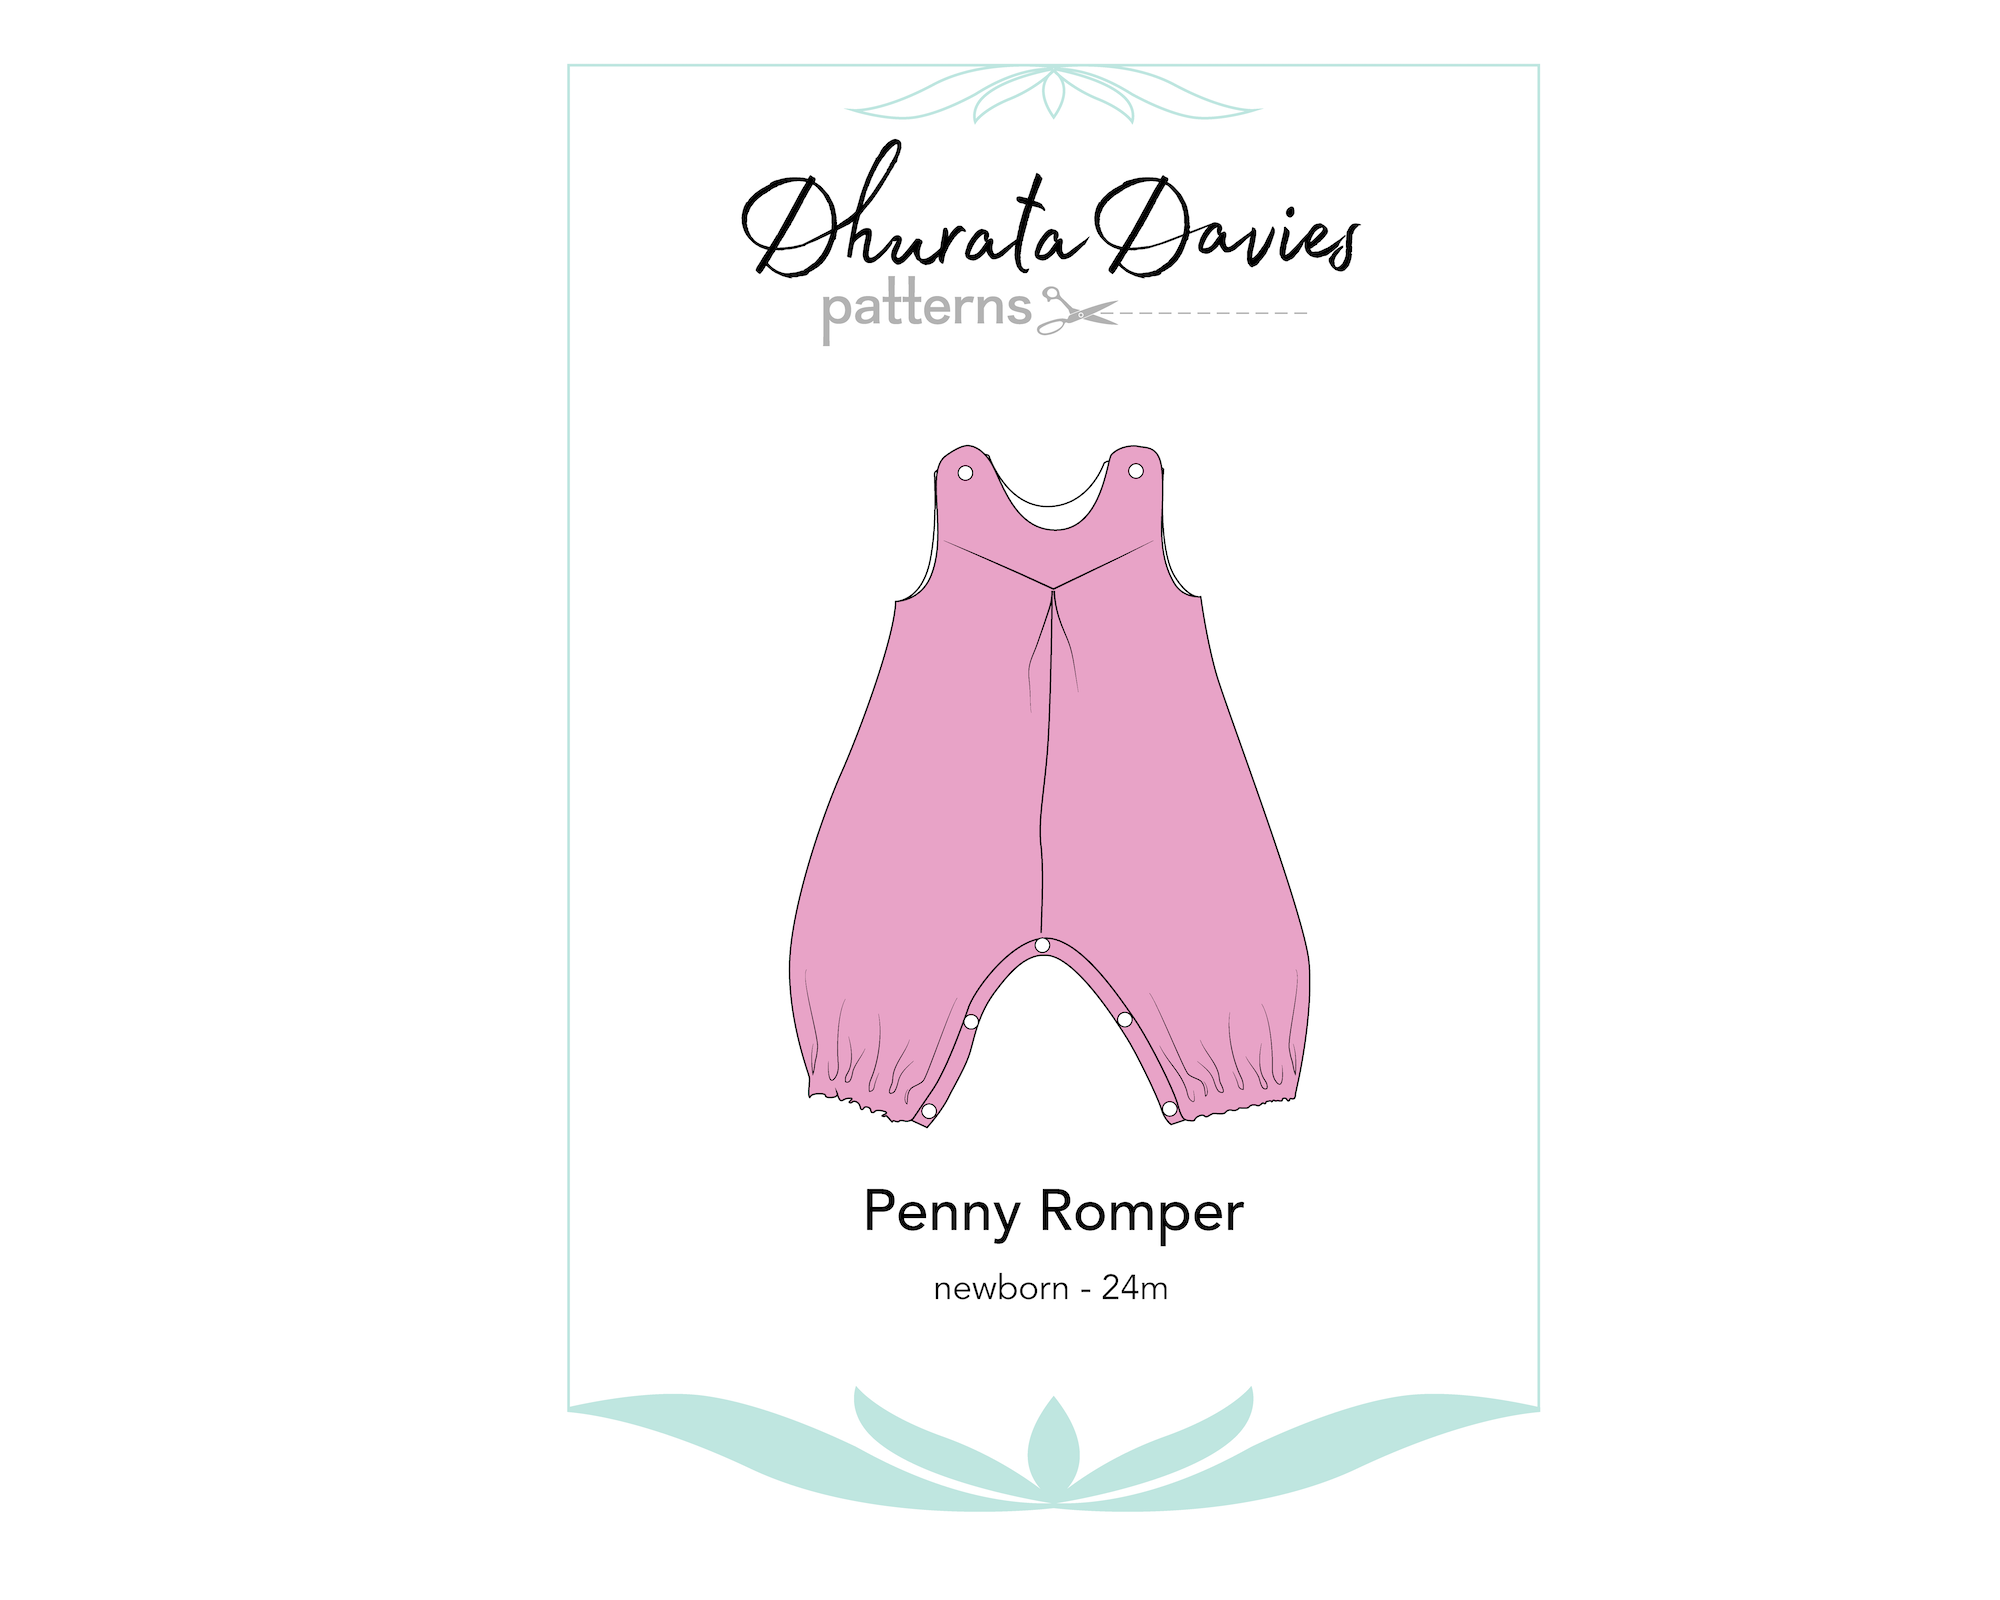 Dhurata Davies Patterns Babies' Penny Romper